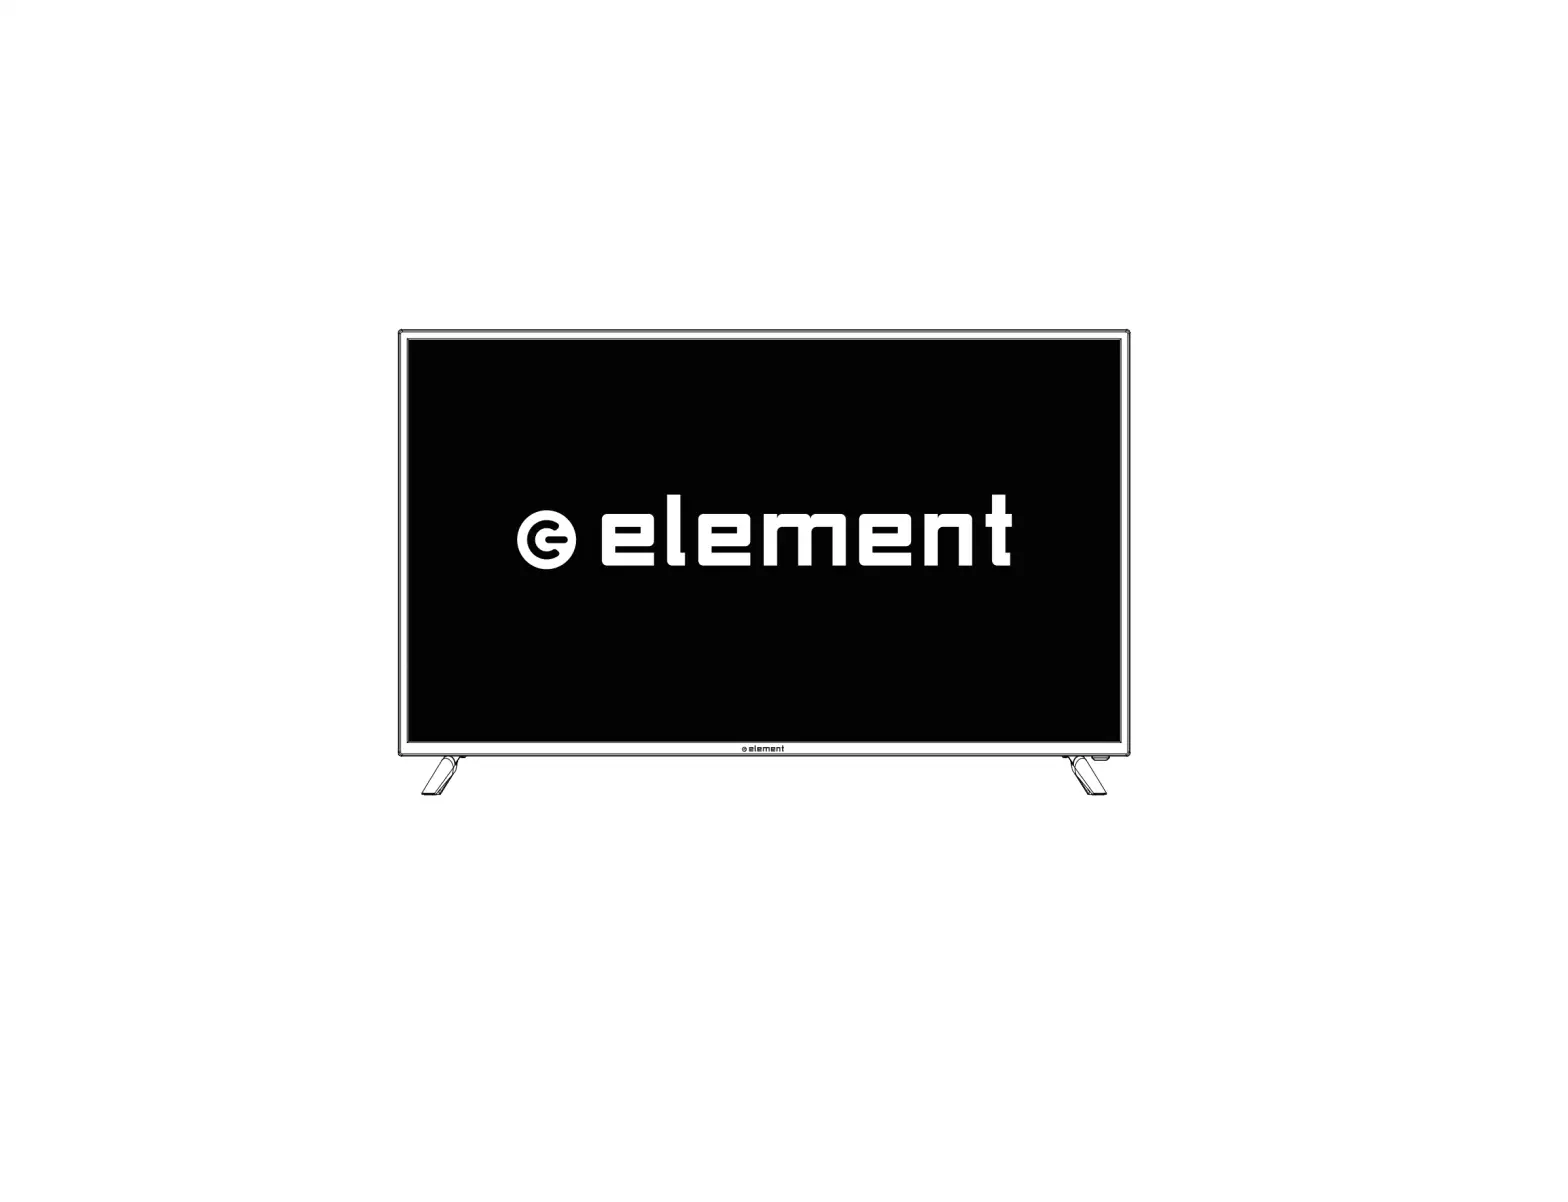 element Digital Led Tv User Guide - Manualsnap